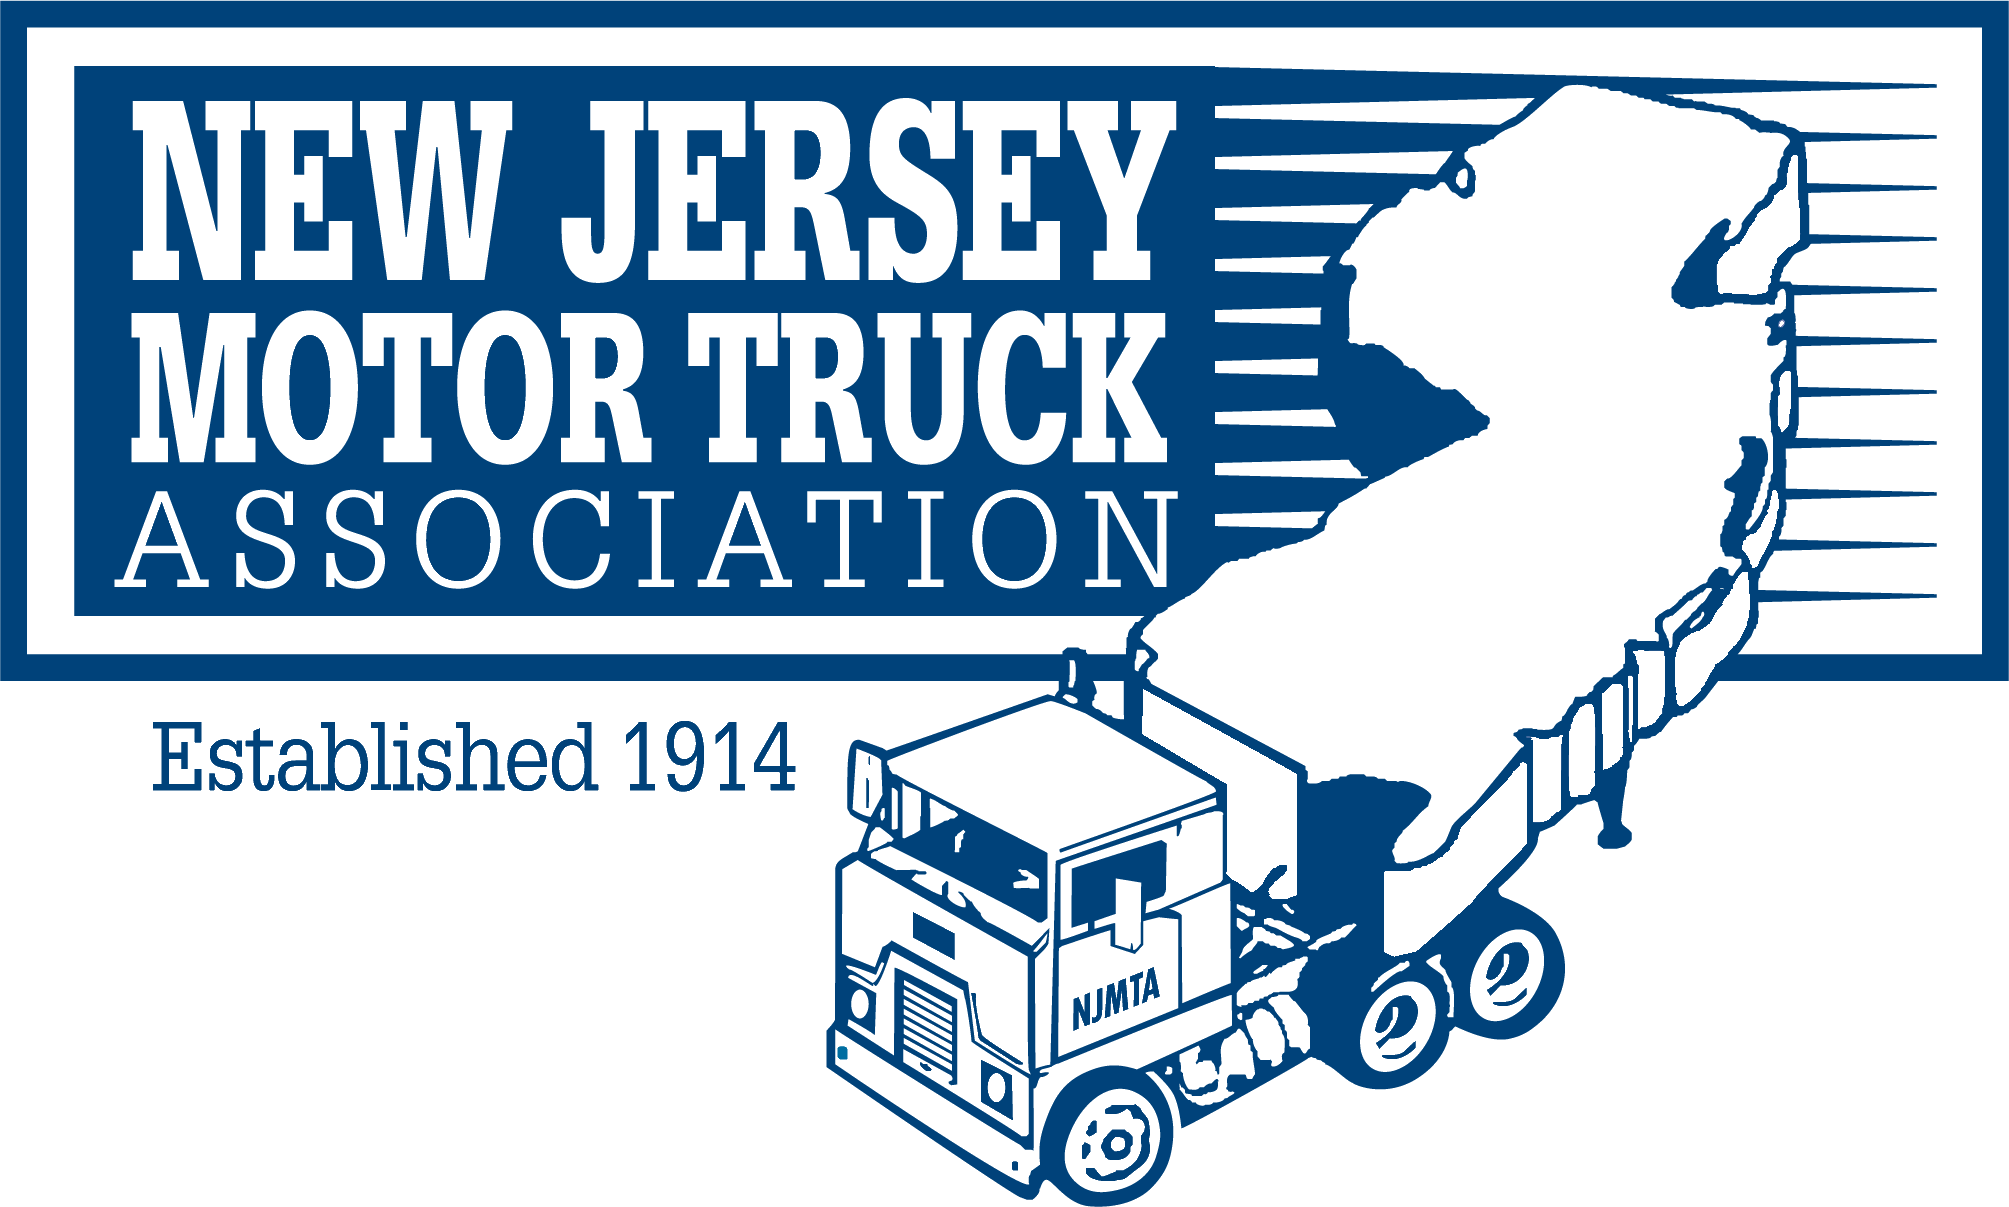 New Jersey Motor Truck Association logo